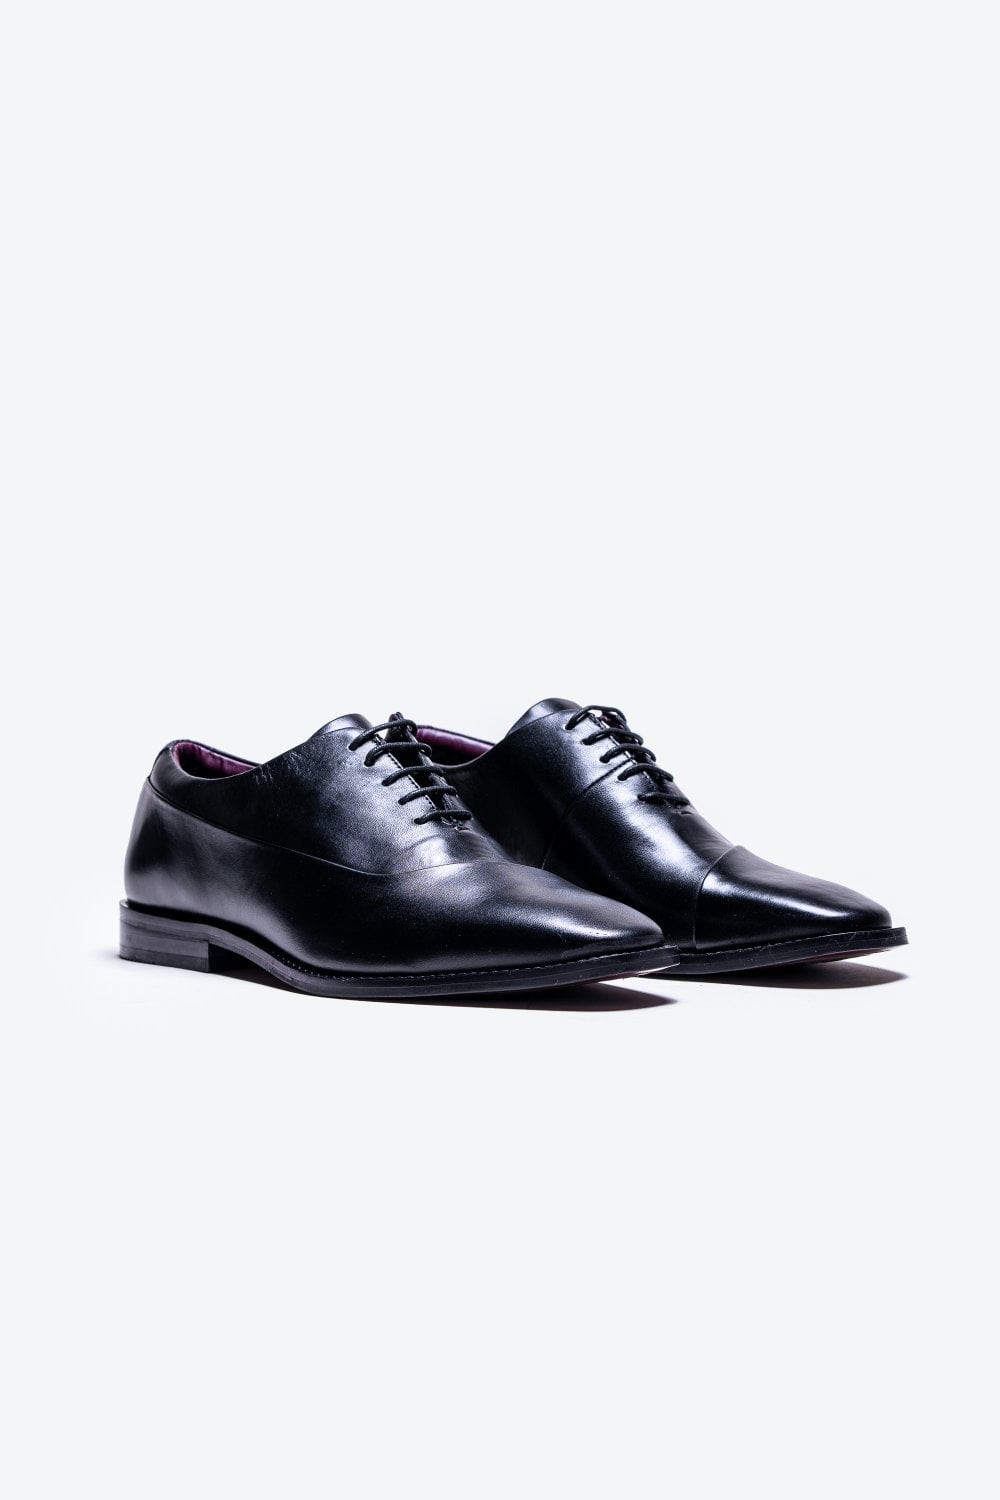 Men's Genuine Leather Oxford Shoes- SEVILLE - Black